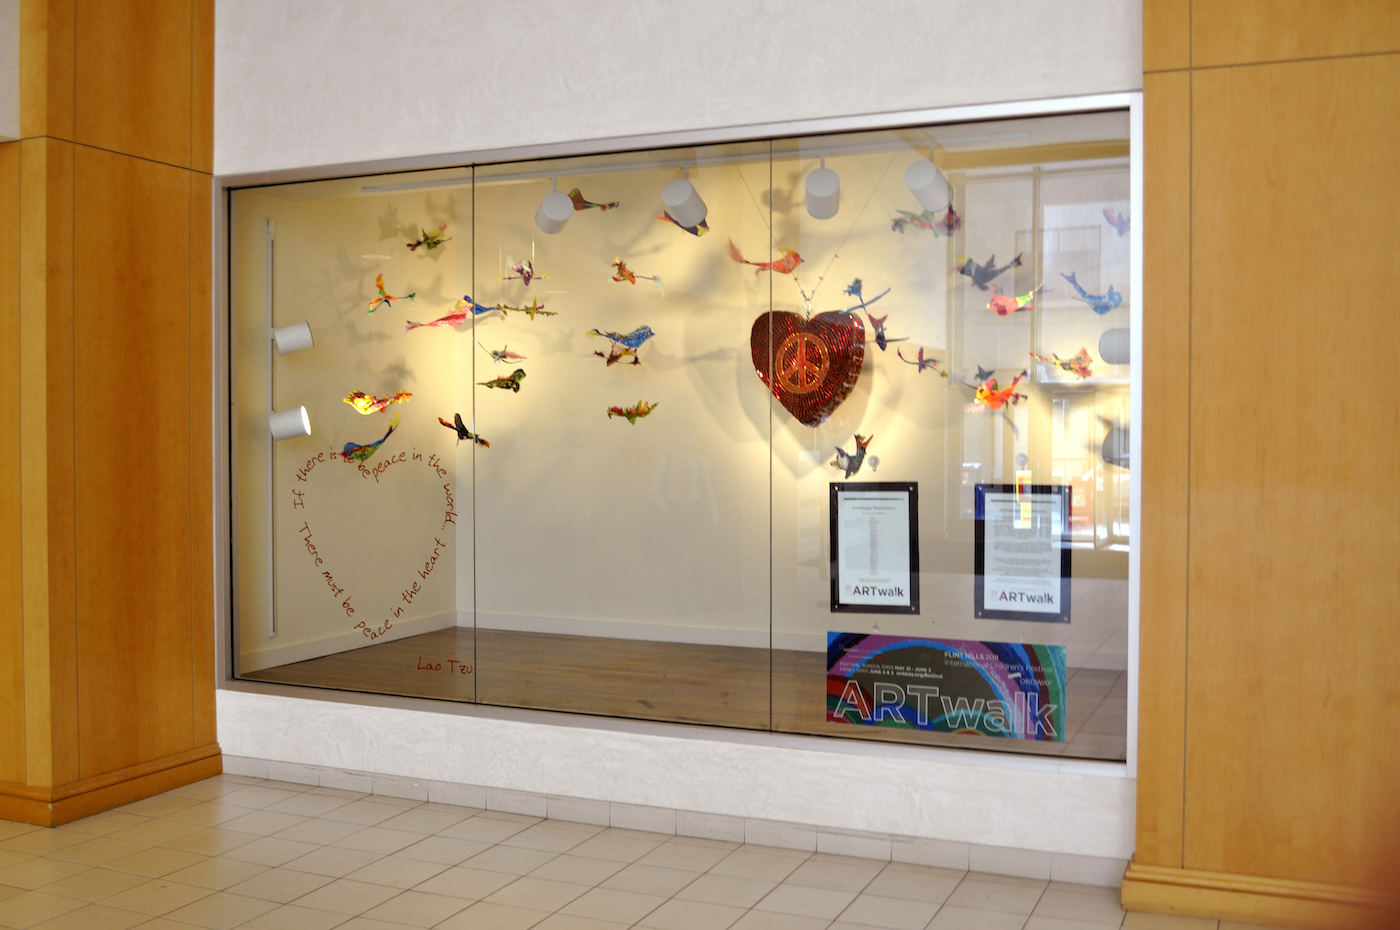 Mosiac Heart with Birds in a window display